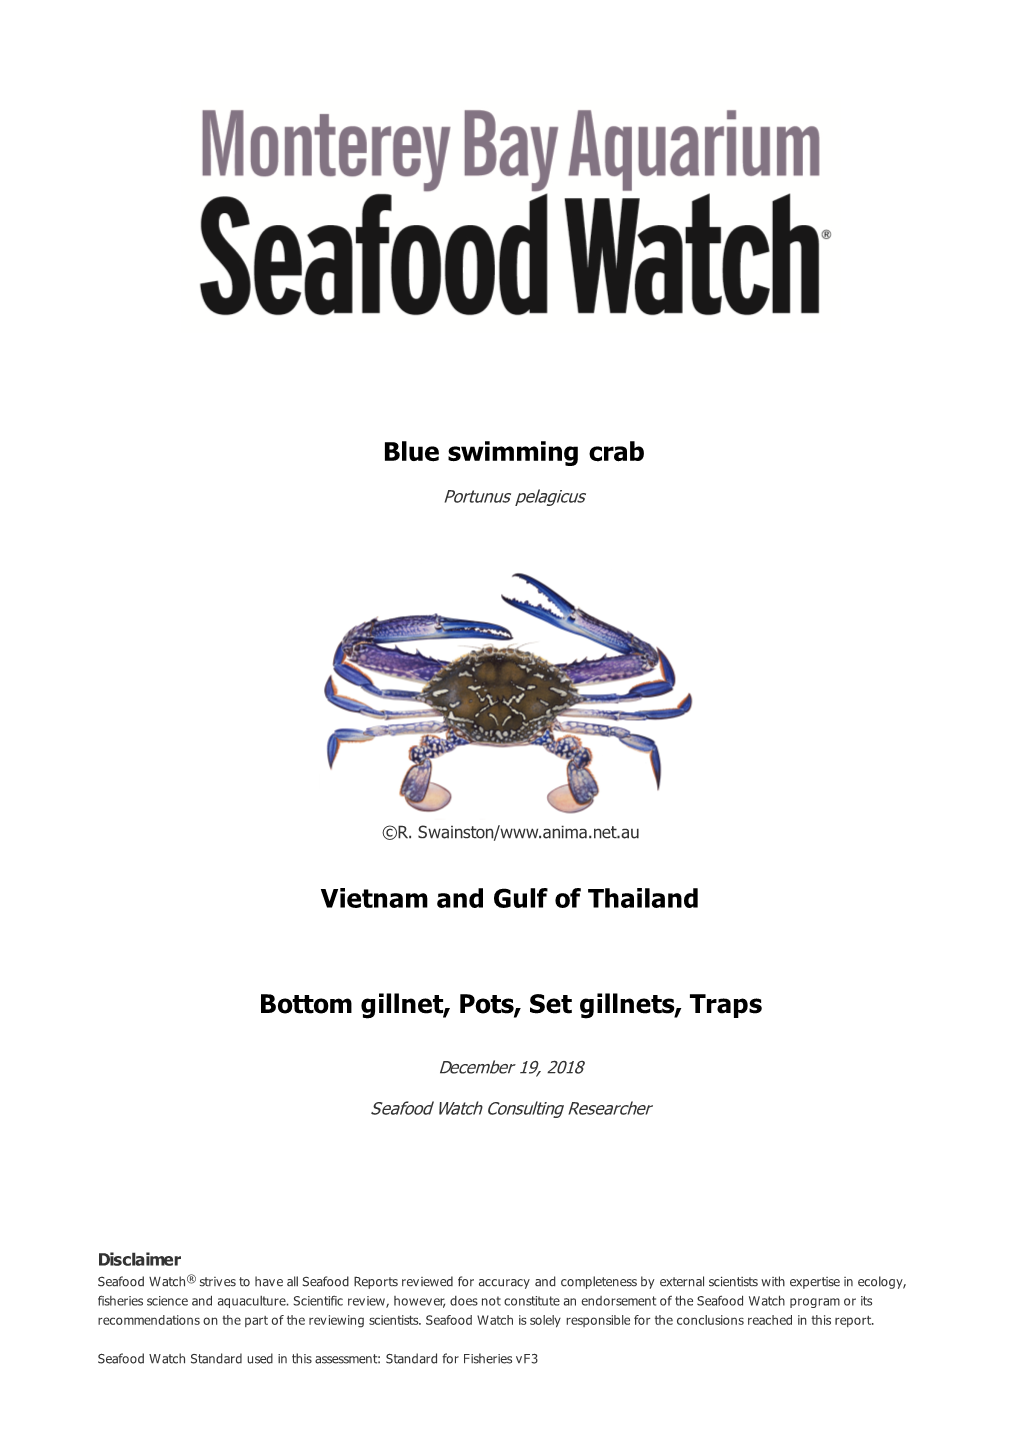 Blue Swimming Crab Vietnam and Gulf of Thailand Bottom Gillnet, Pots, Set Gillnets, Traps